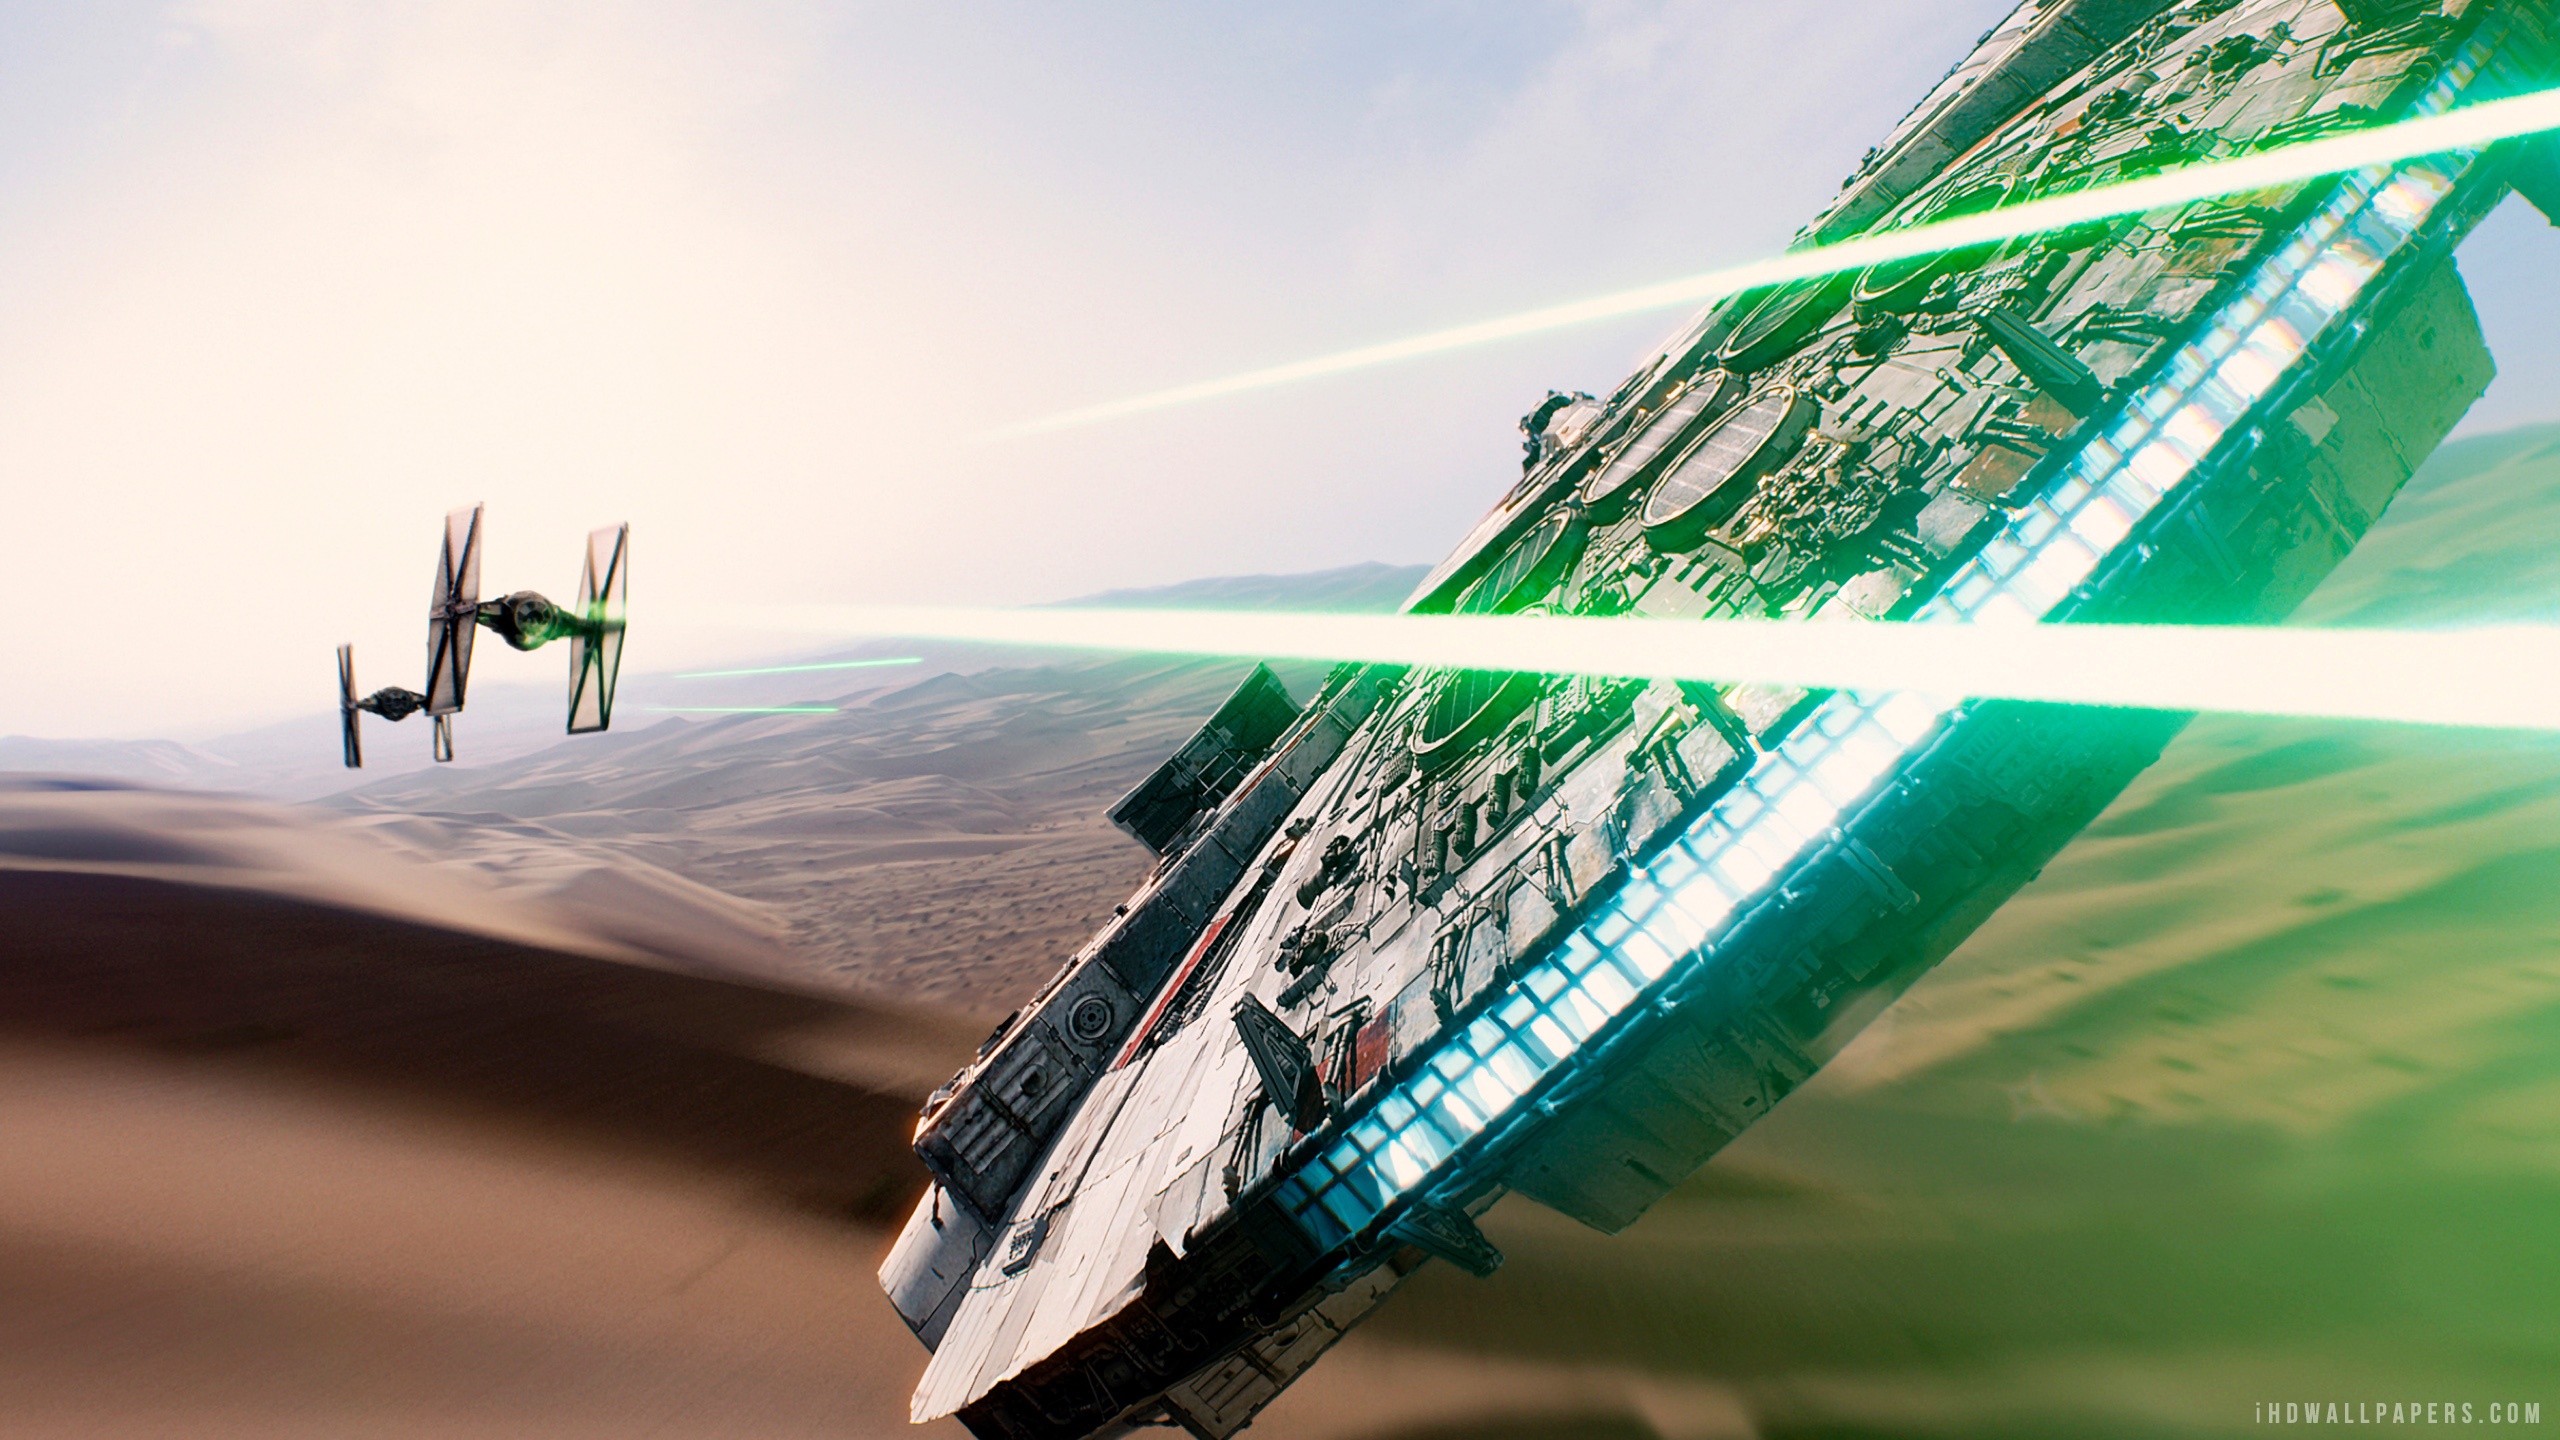 Star Wars Episode VII The Force Awakens HD Wallpaper iHD